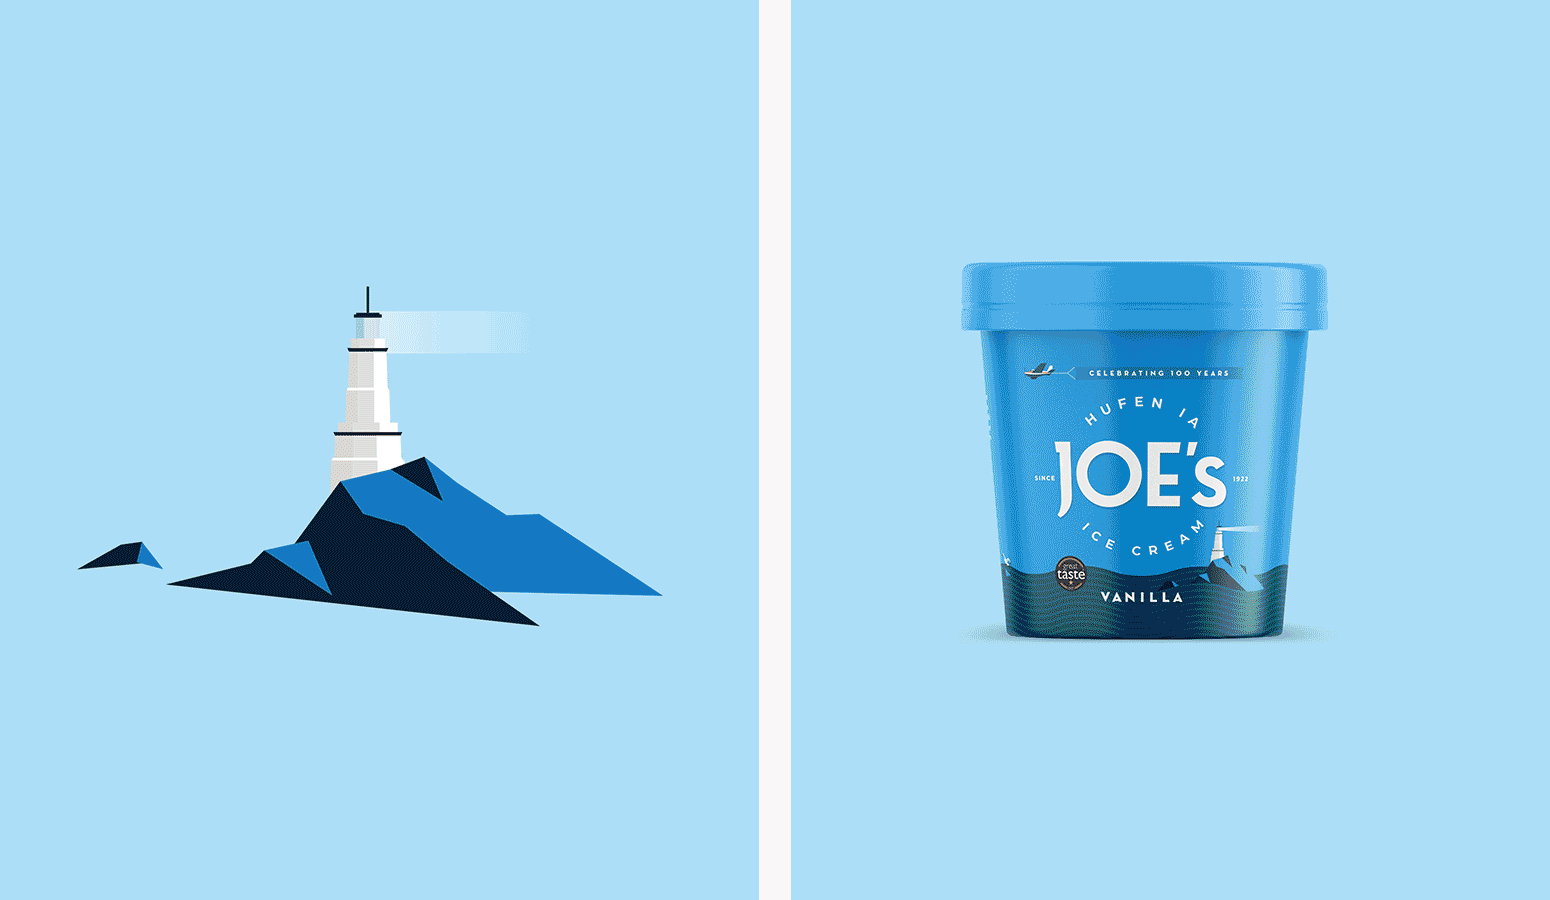 Joe’s Ice Cream